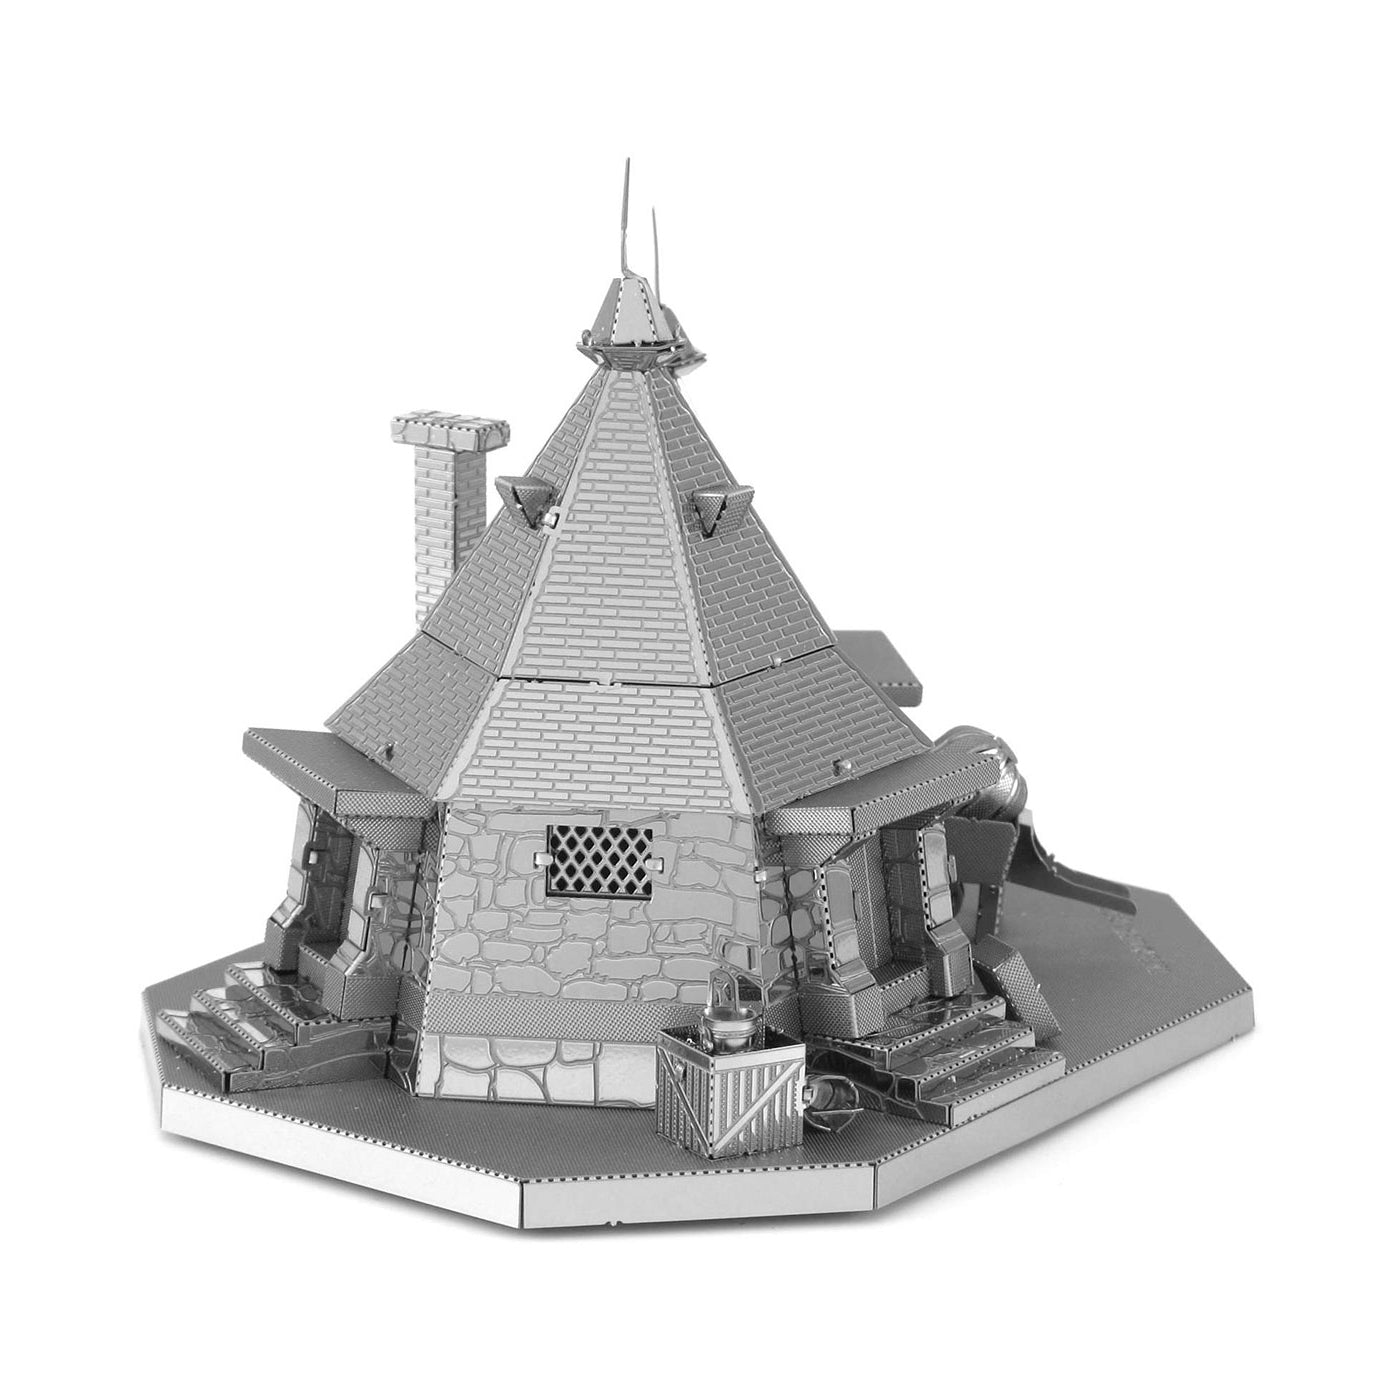 Metal Earth Modèle 3D Harry Potter The Burrow – Kit de